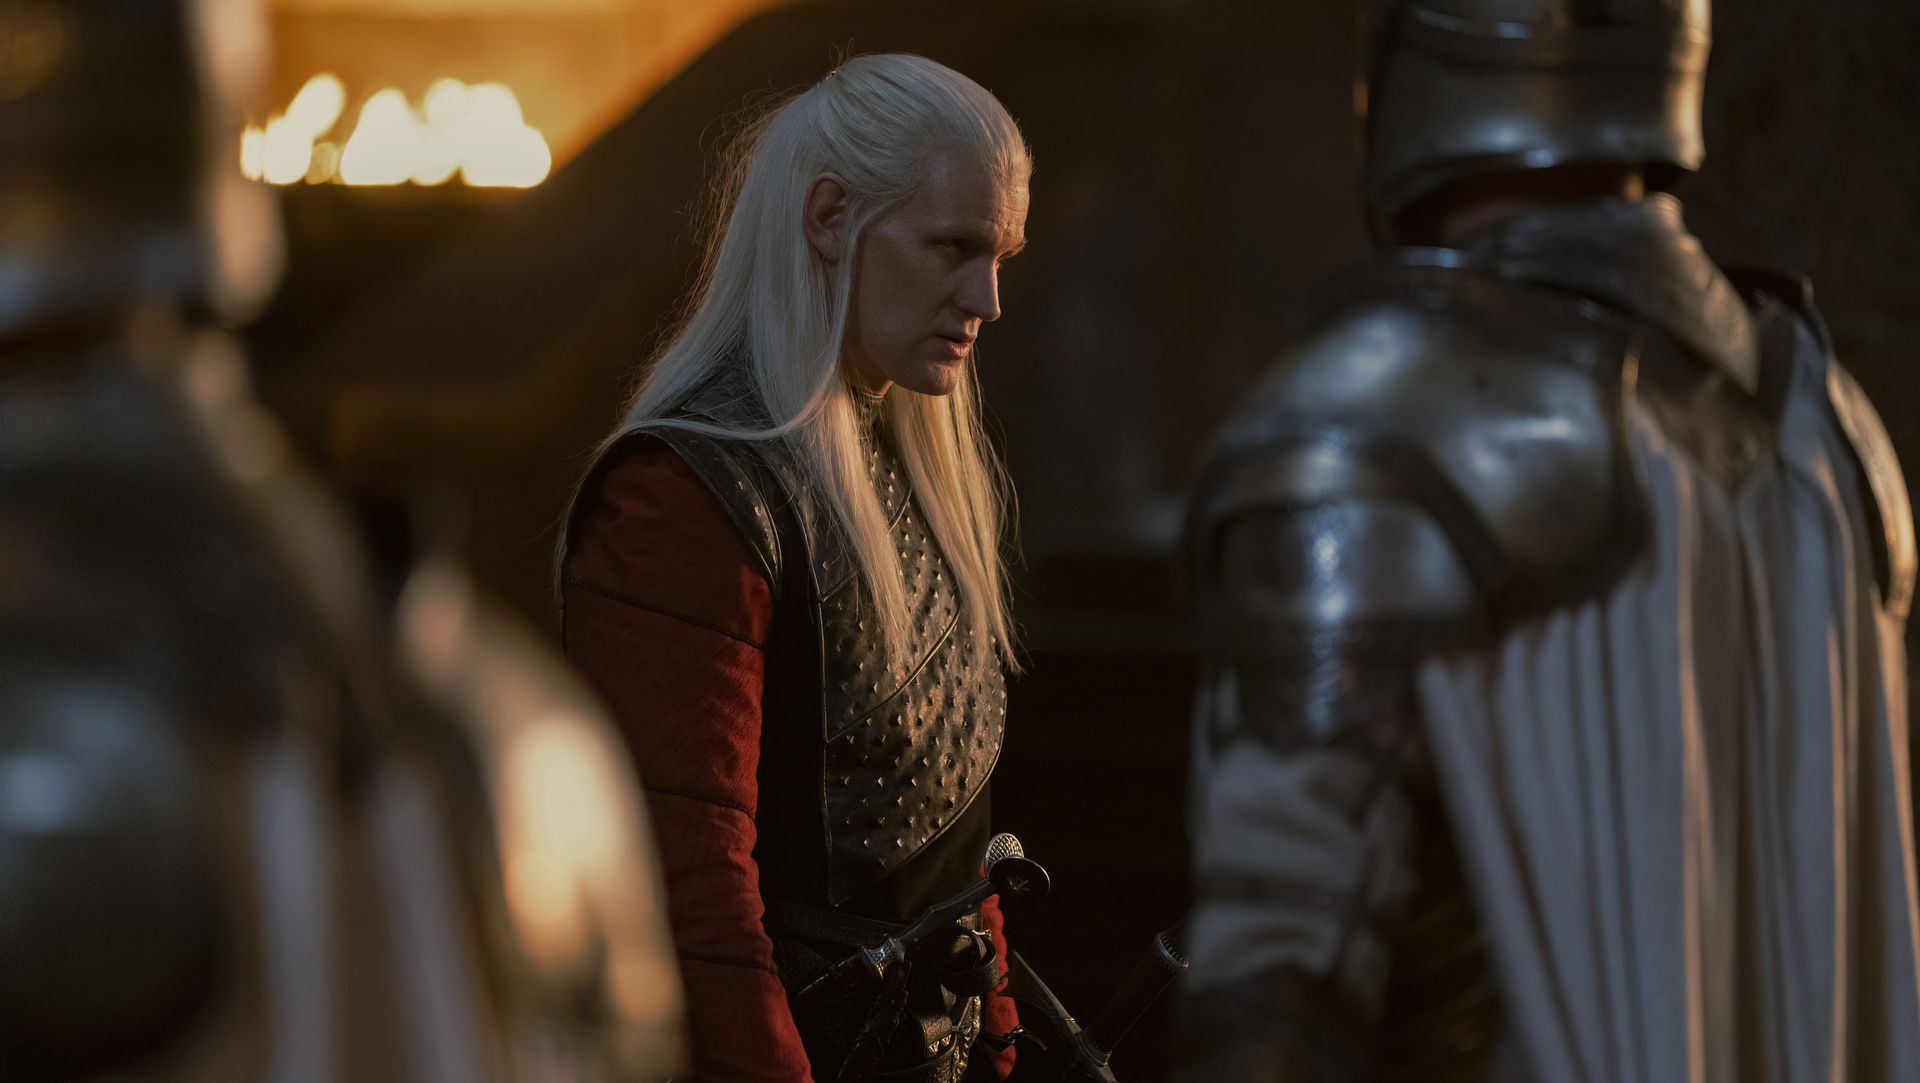 Princess Rhaenyra & Daenerys Targaryen Connections in 'House of the Dragon'